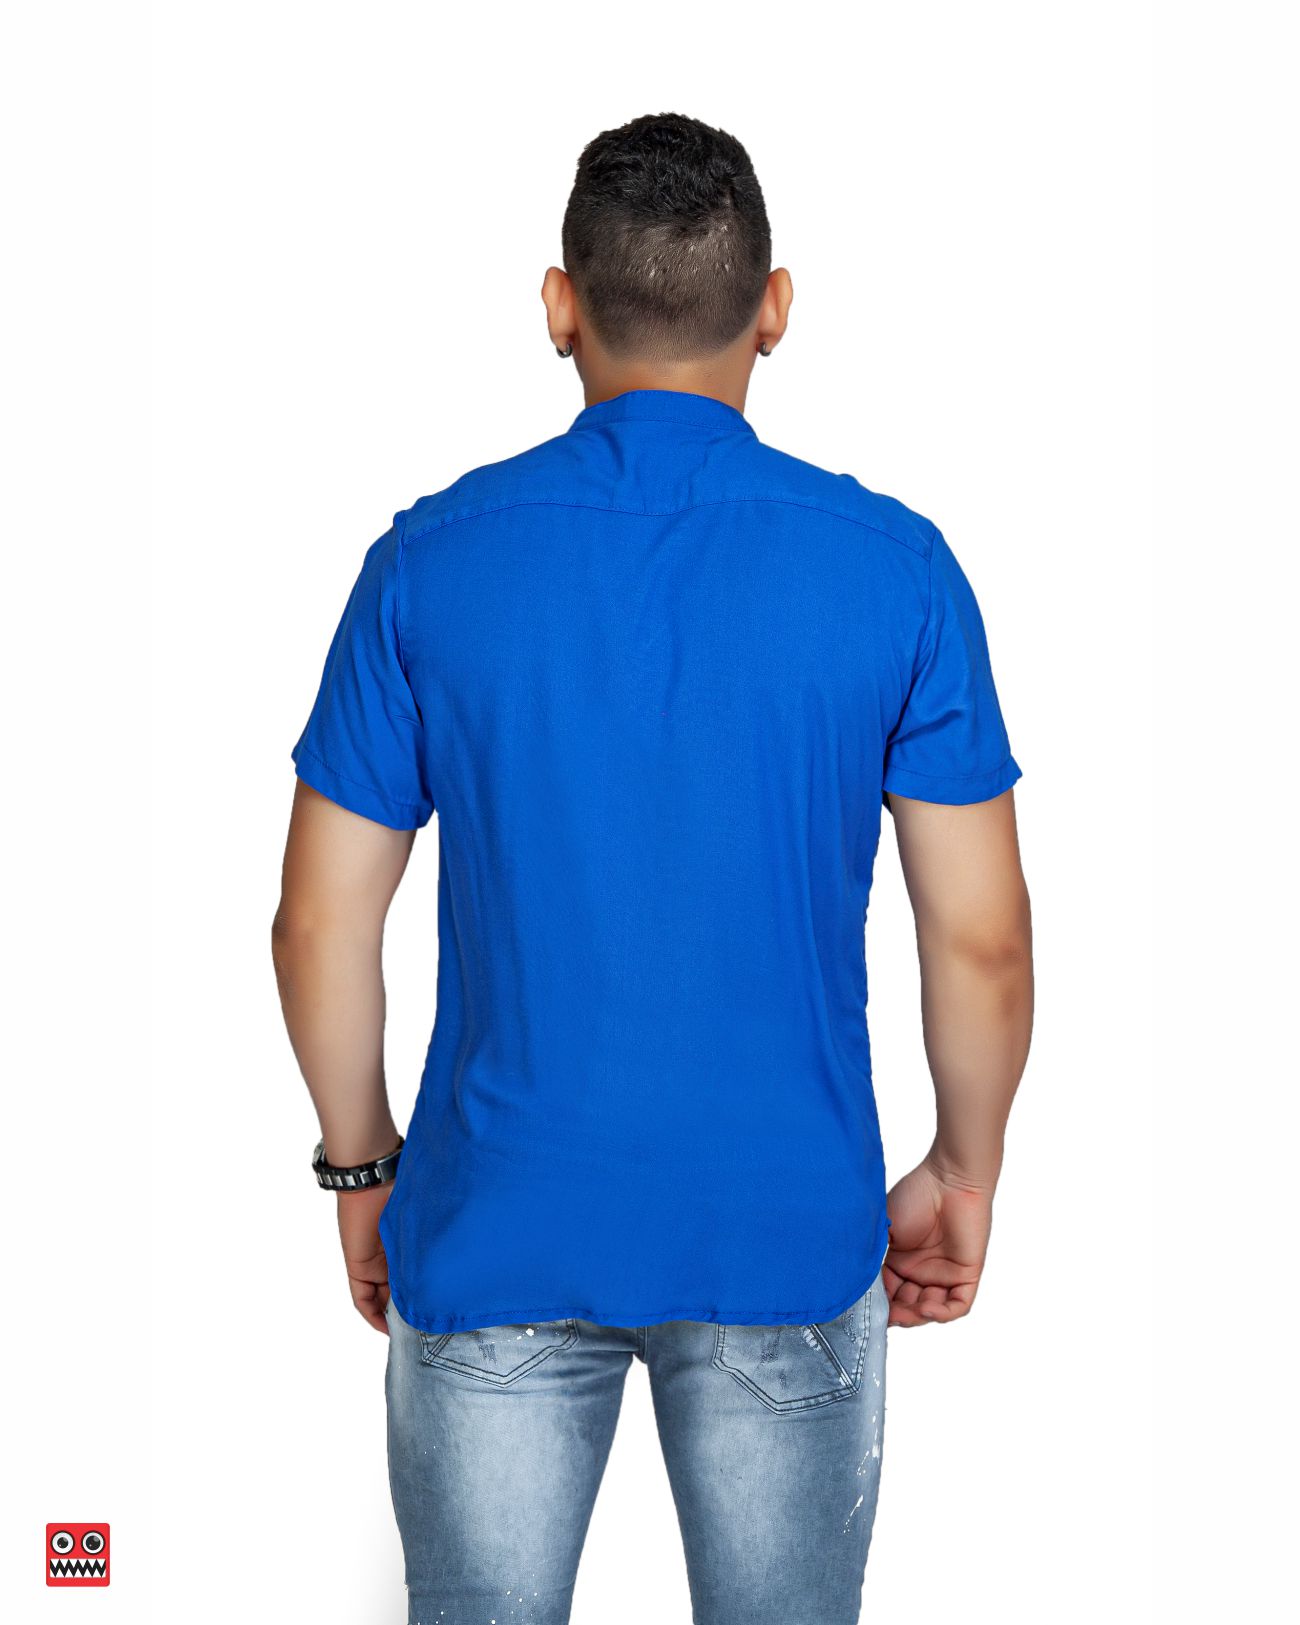 ref 1783 02 Camisa MC azul royal , tela fria 100% viscosa.